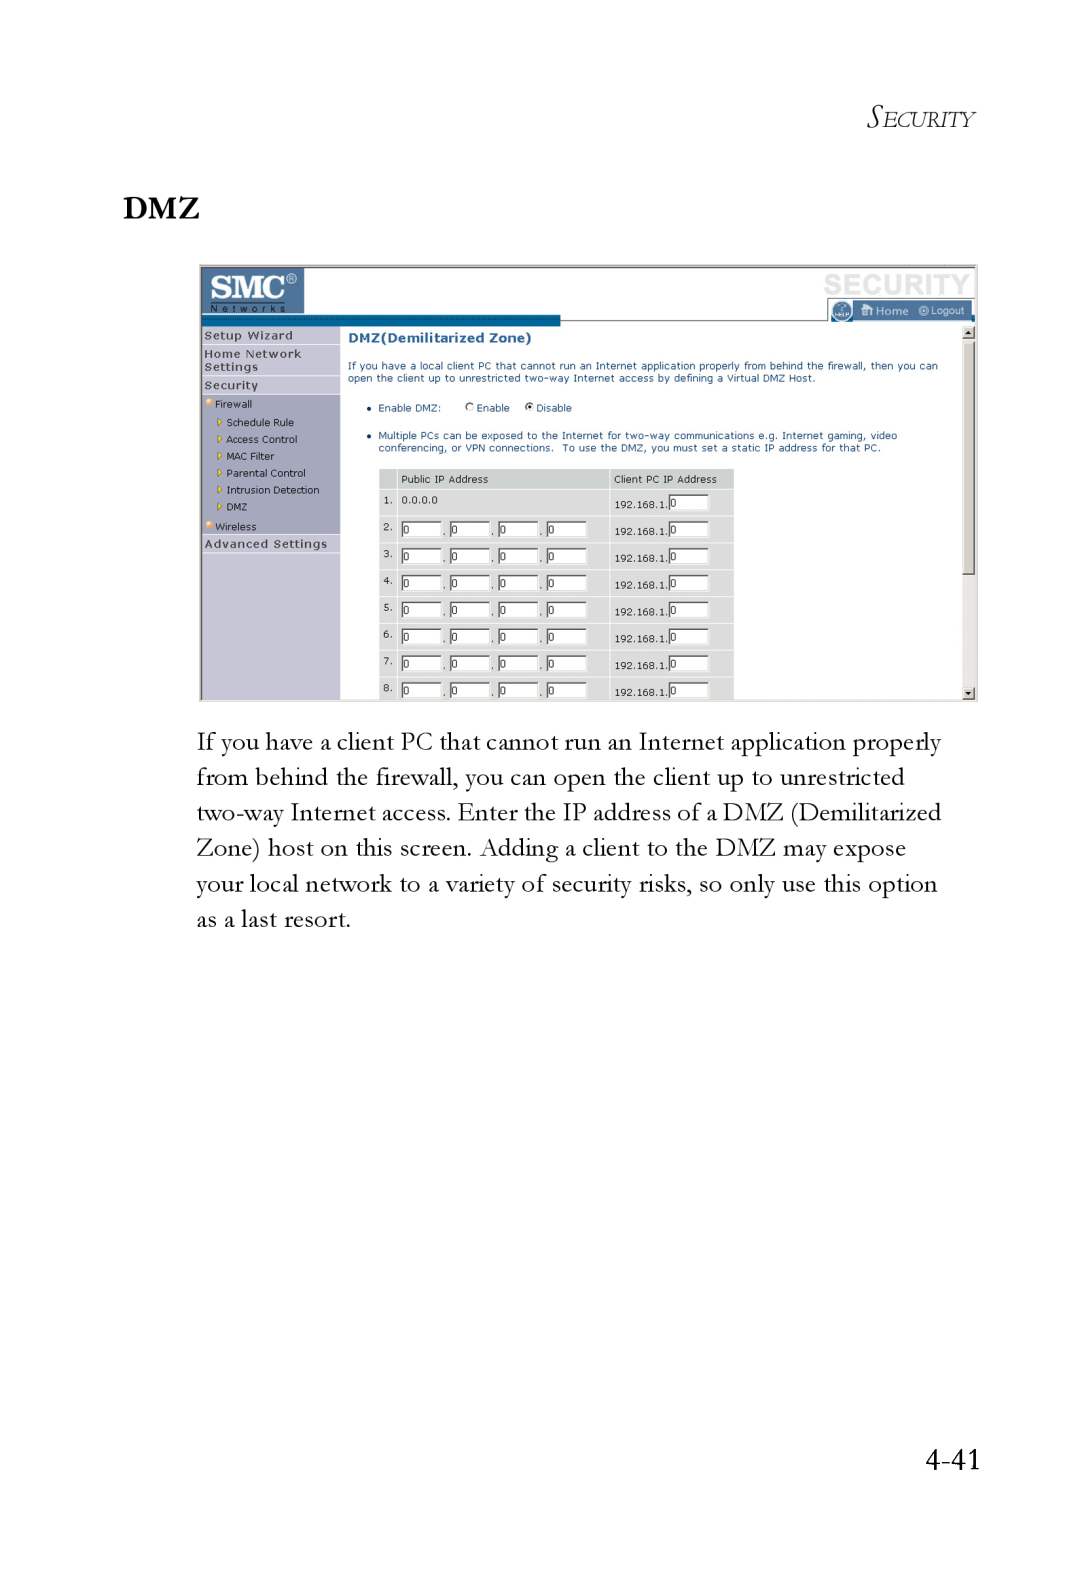 SMC Networks SMCWBR14T-G manual 4-41, Security 